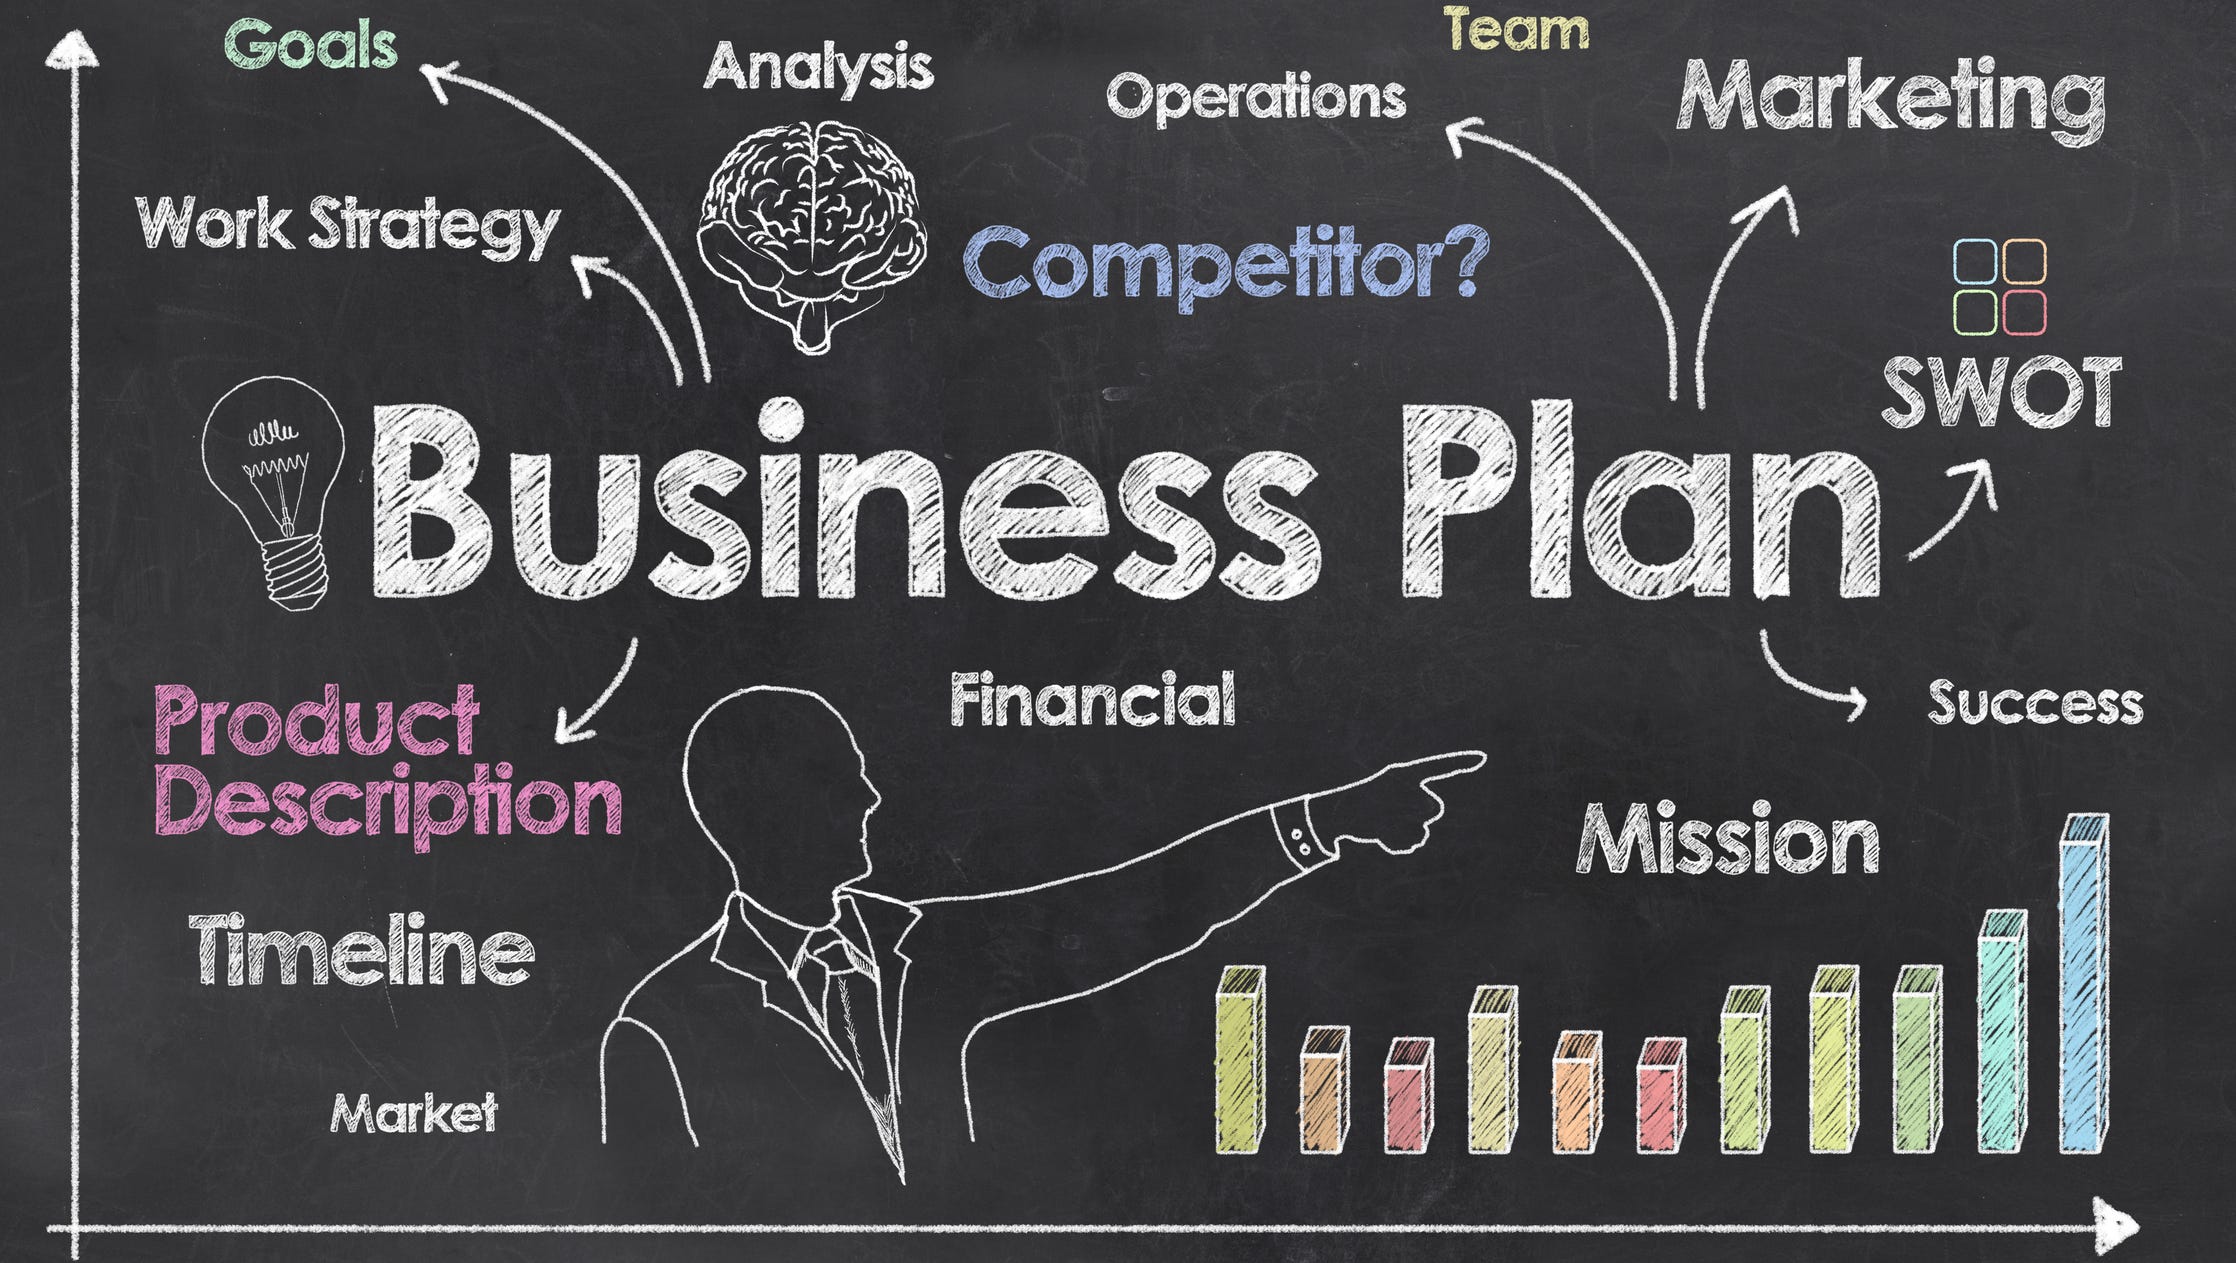 does a good business plan fails